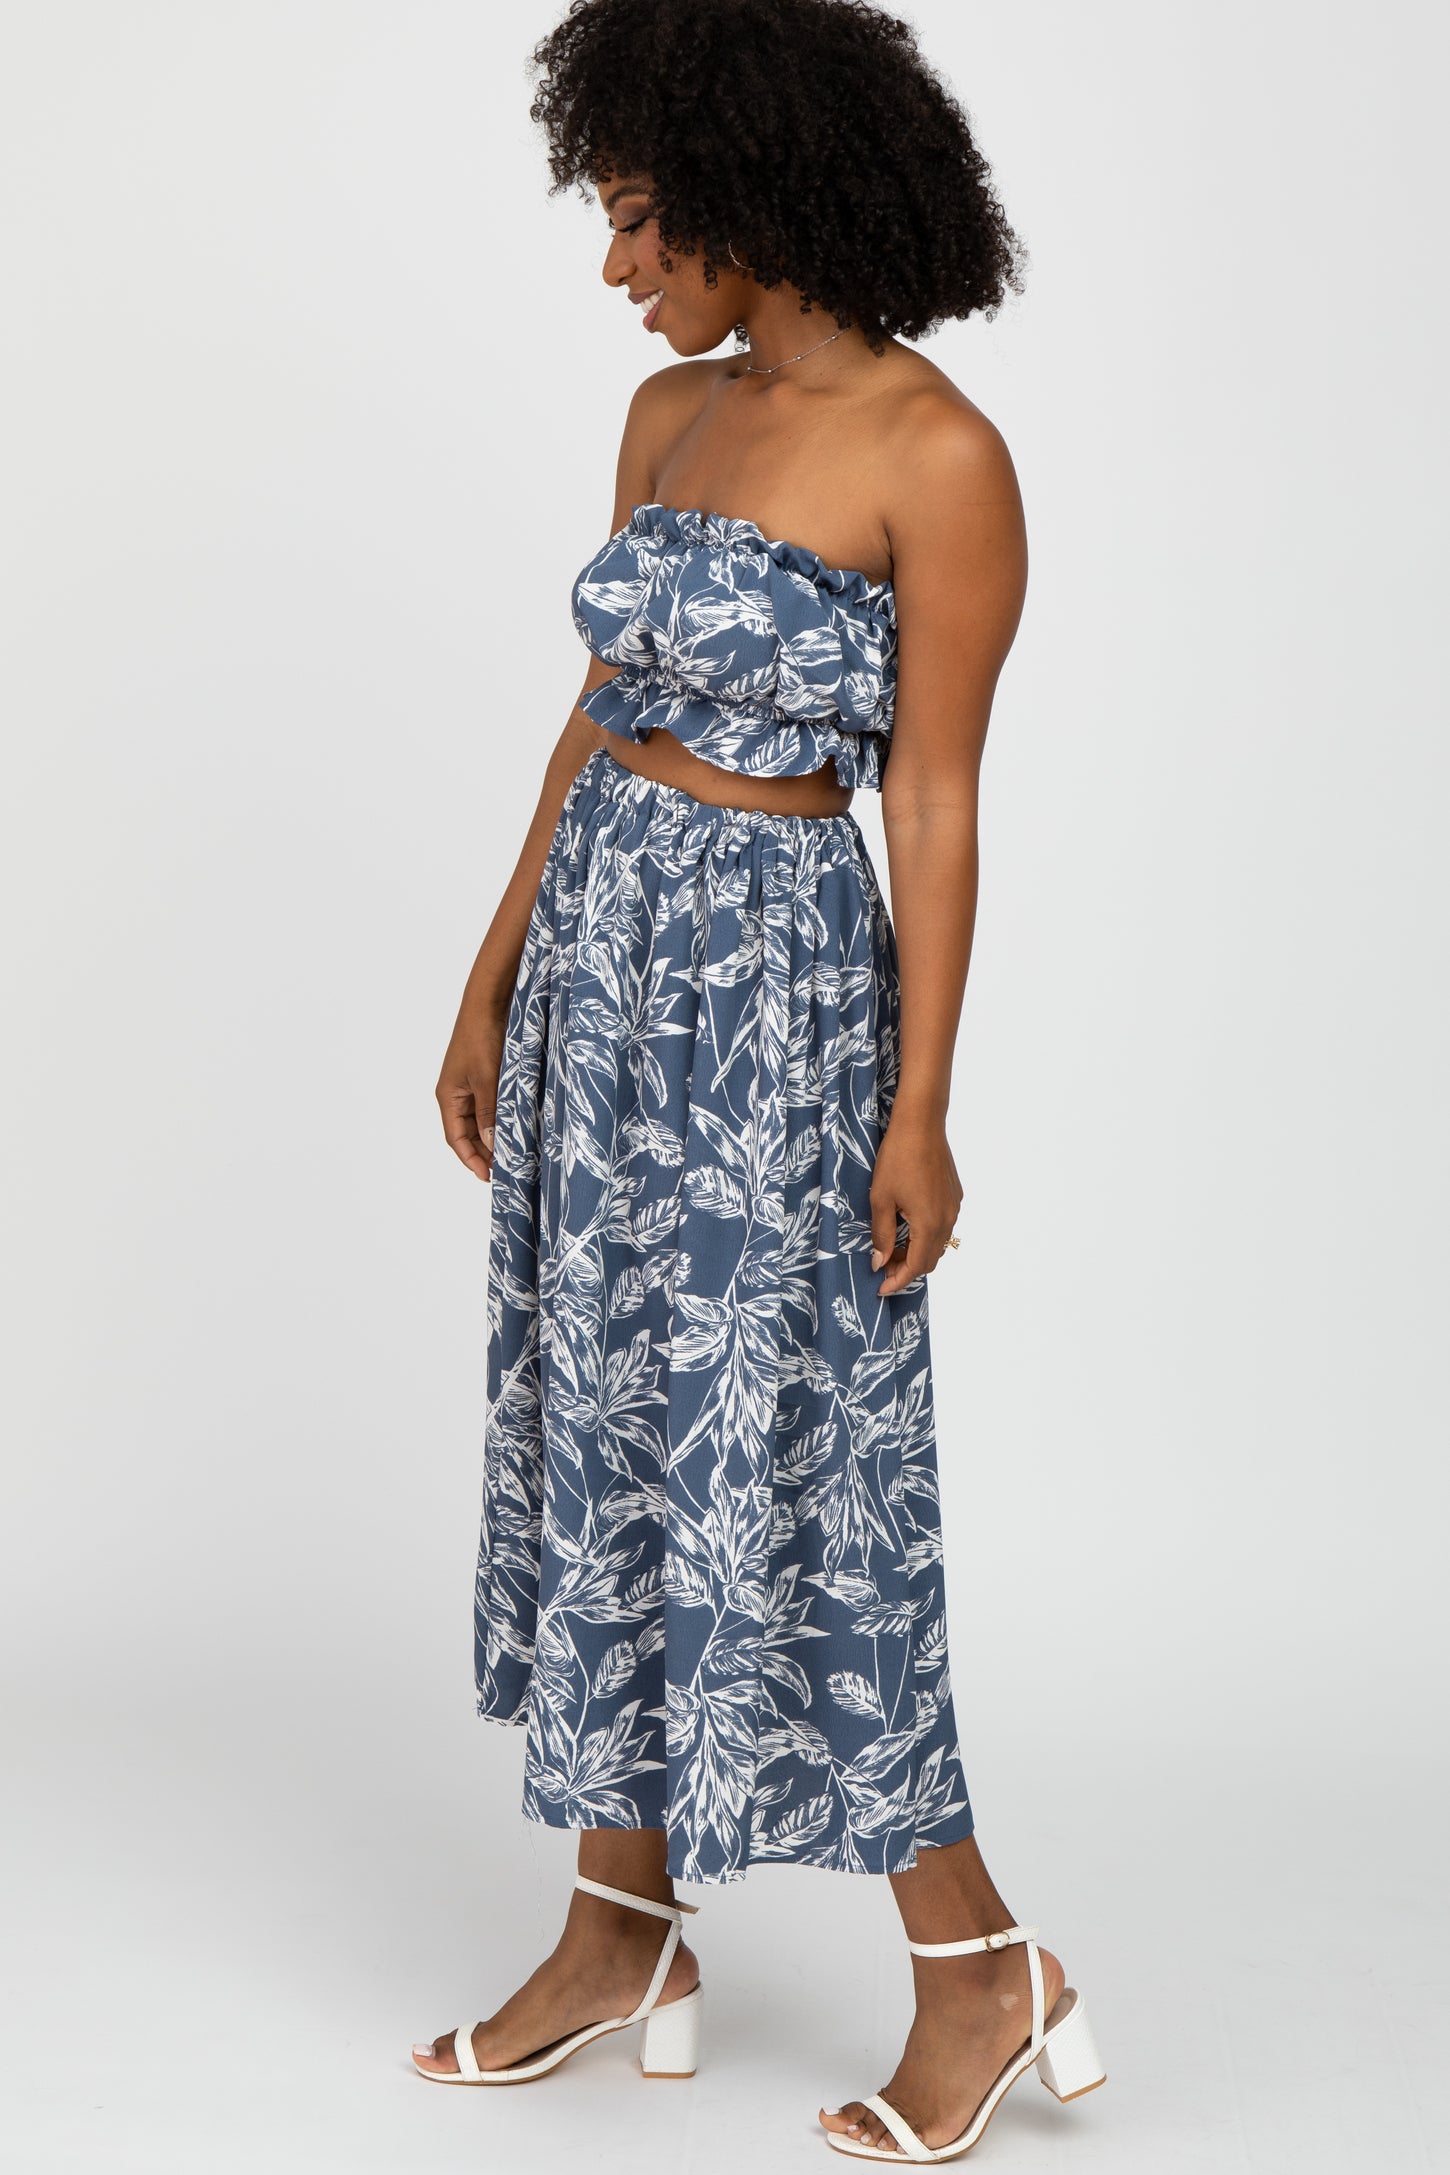 Blue Floral Print A-Line Skirt Set